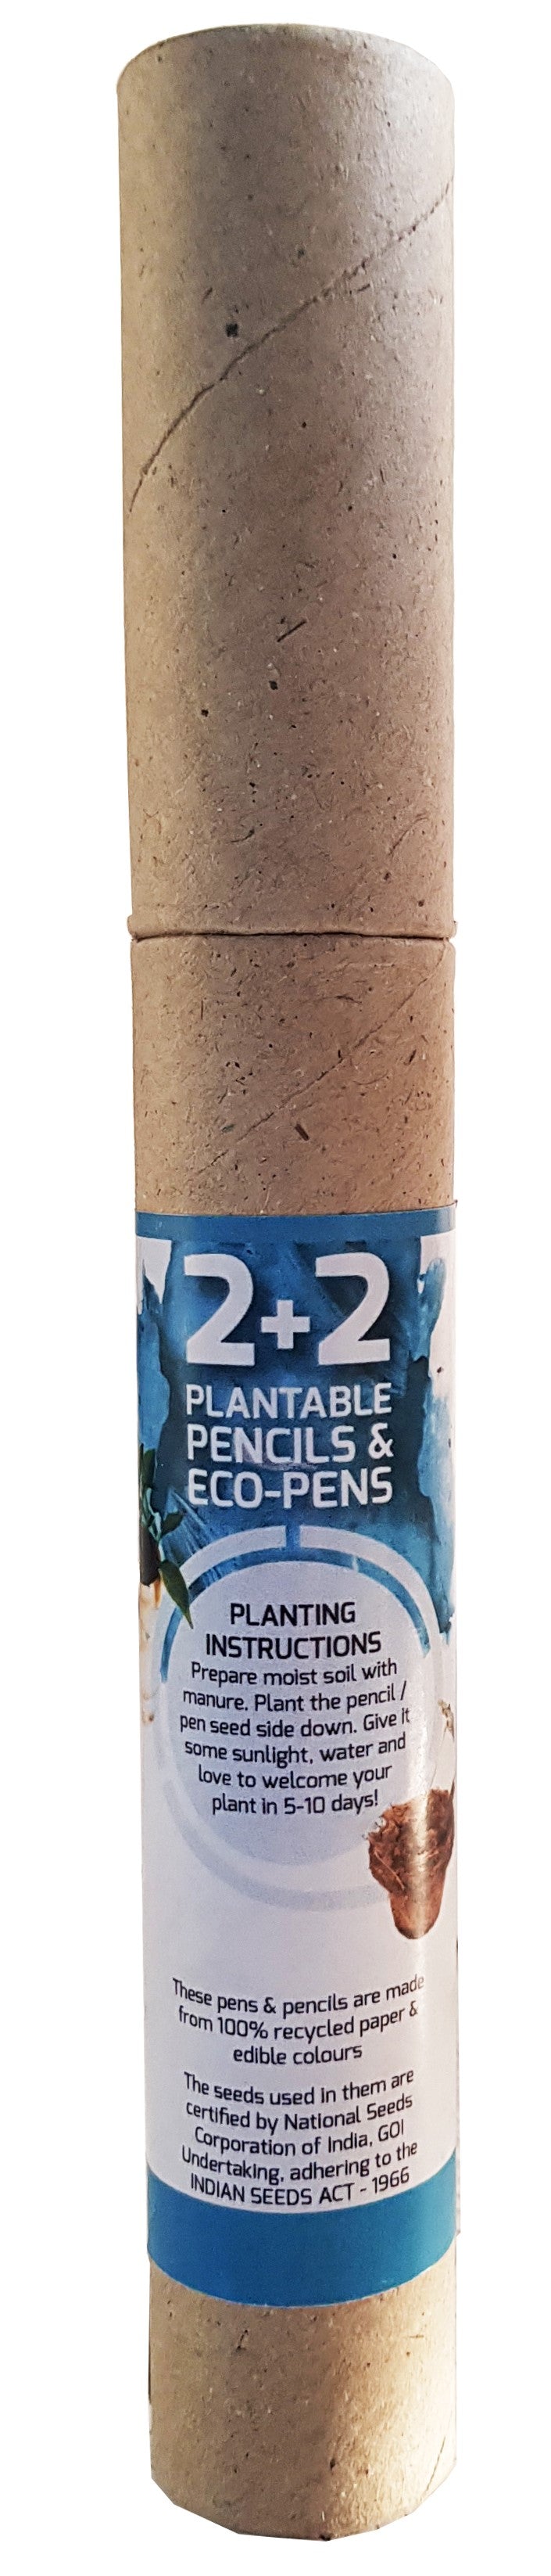 2+2 PLANTABLE PENCILS & PENS